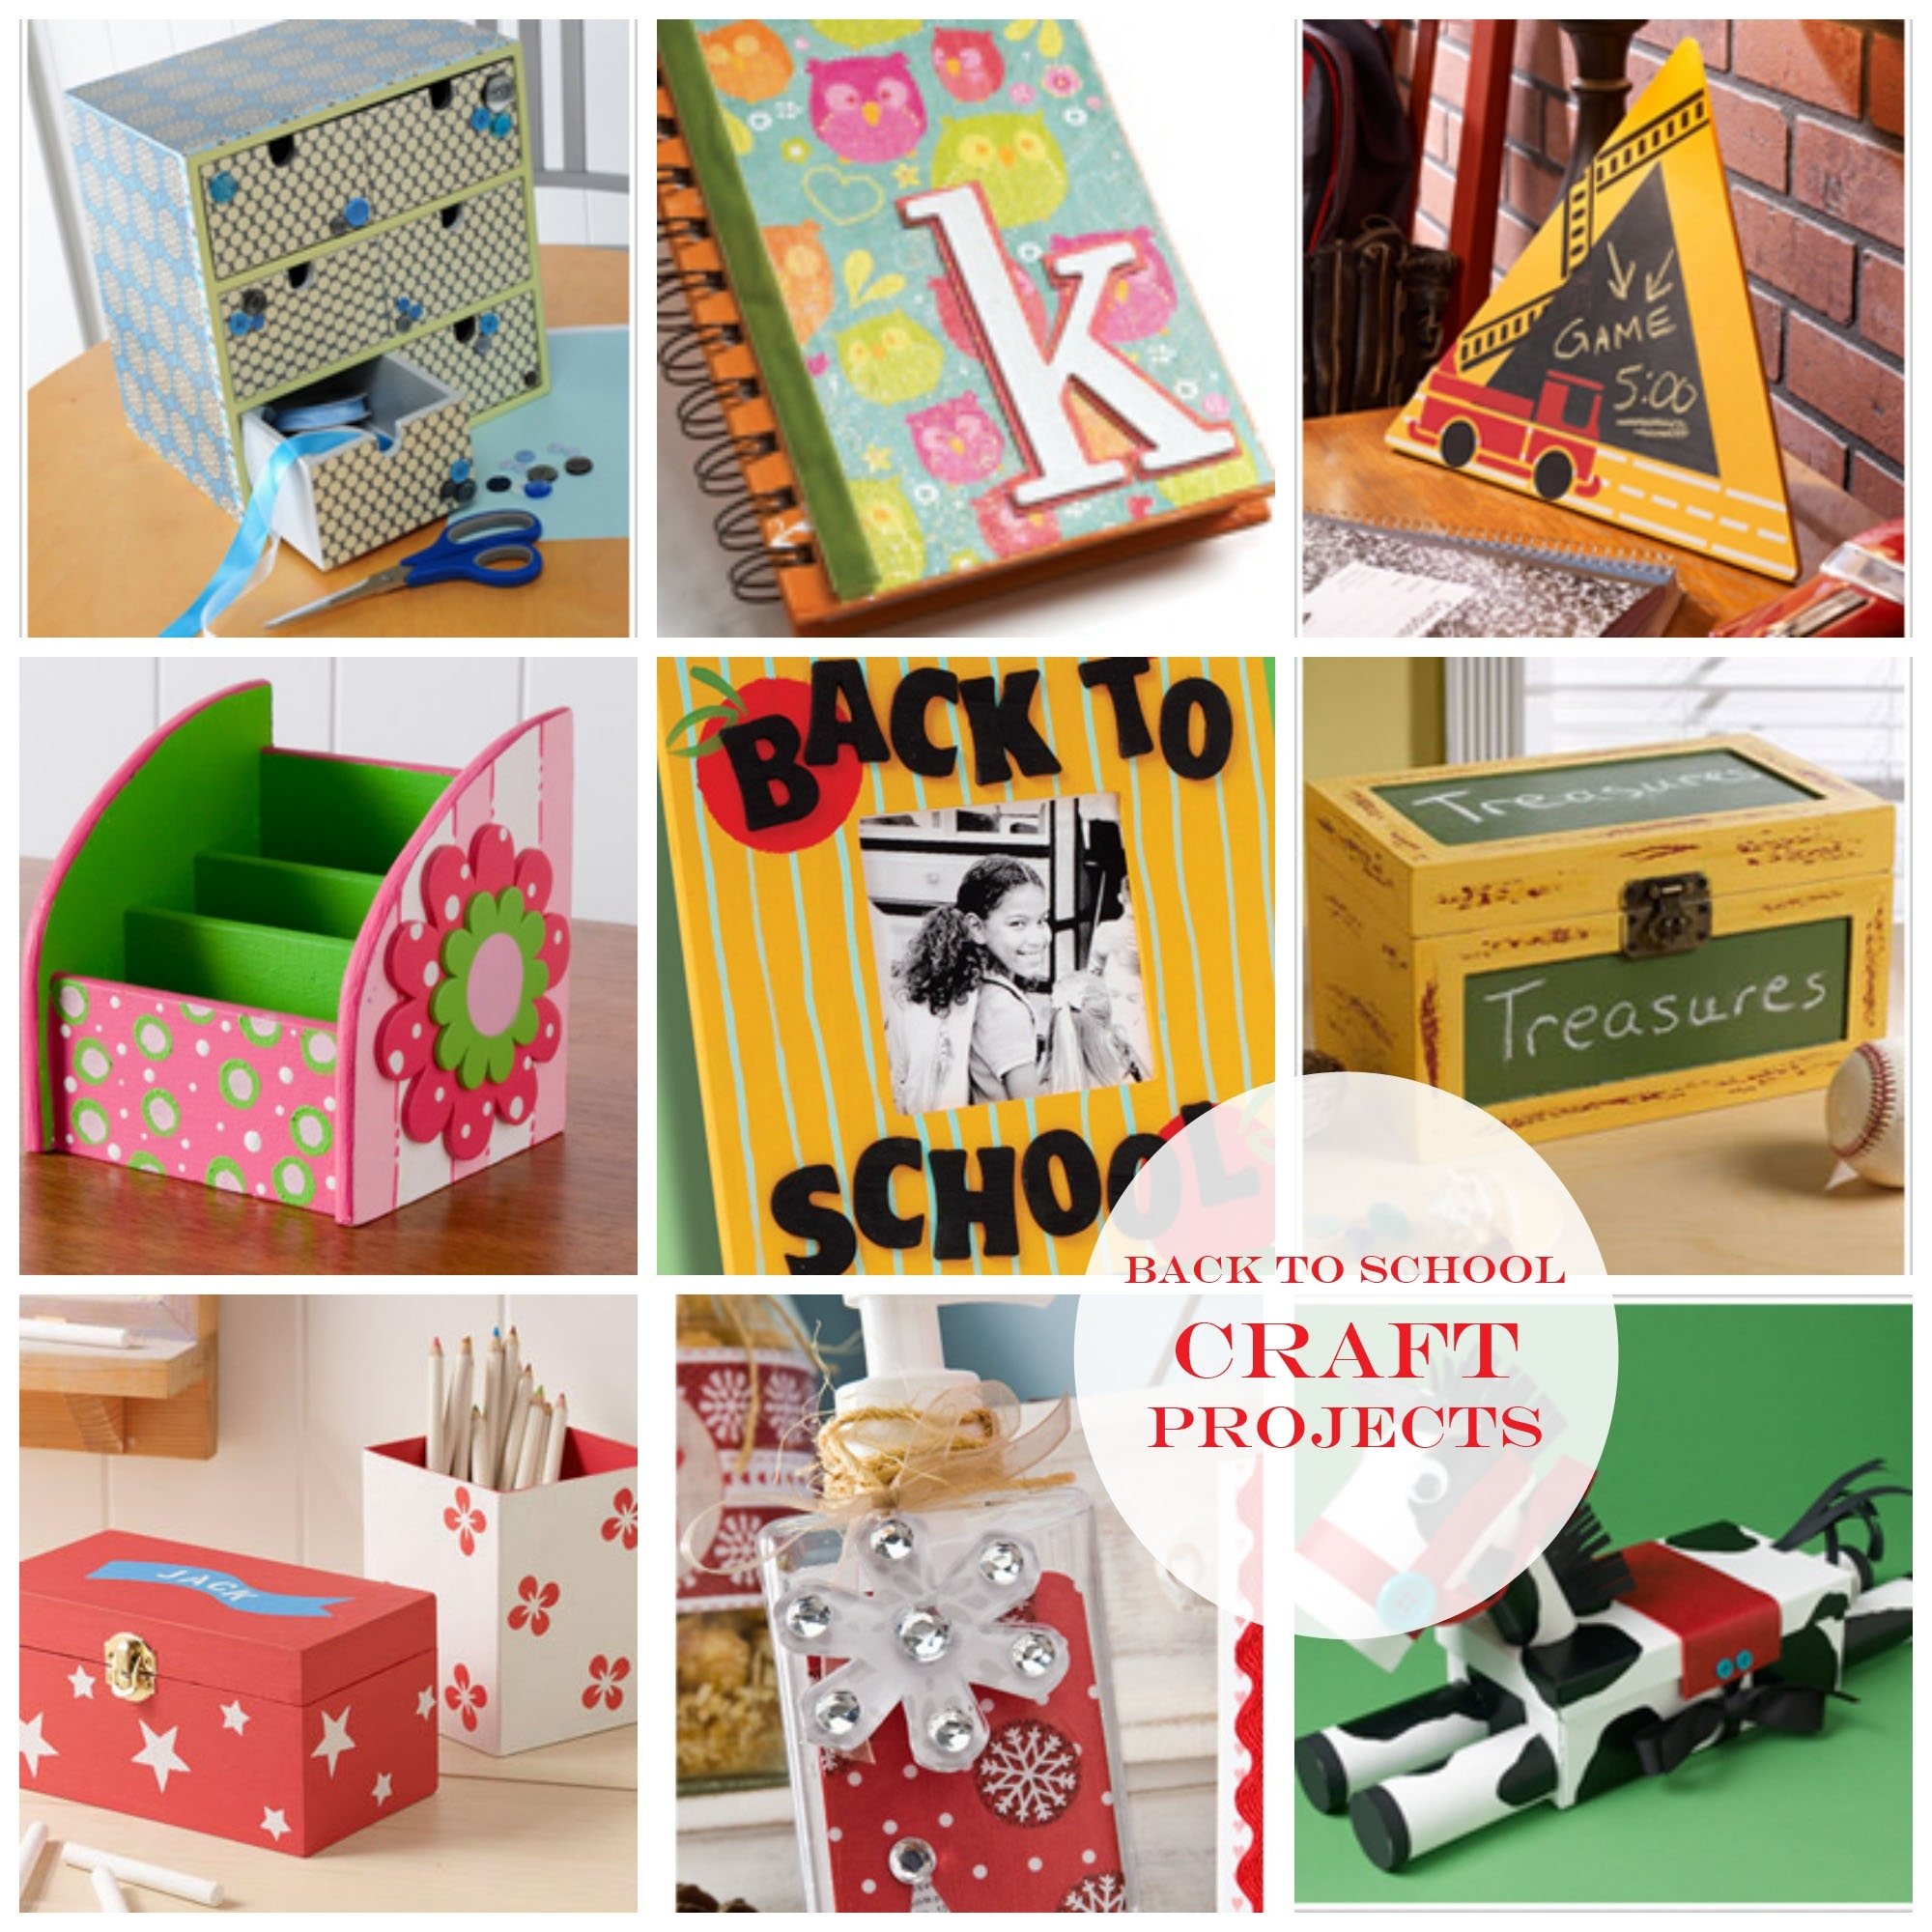 10 Cute Pinterest Back To School Ideas back to school craft project ideas diy crafts plaidcrafts craft 1 2022